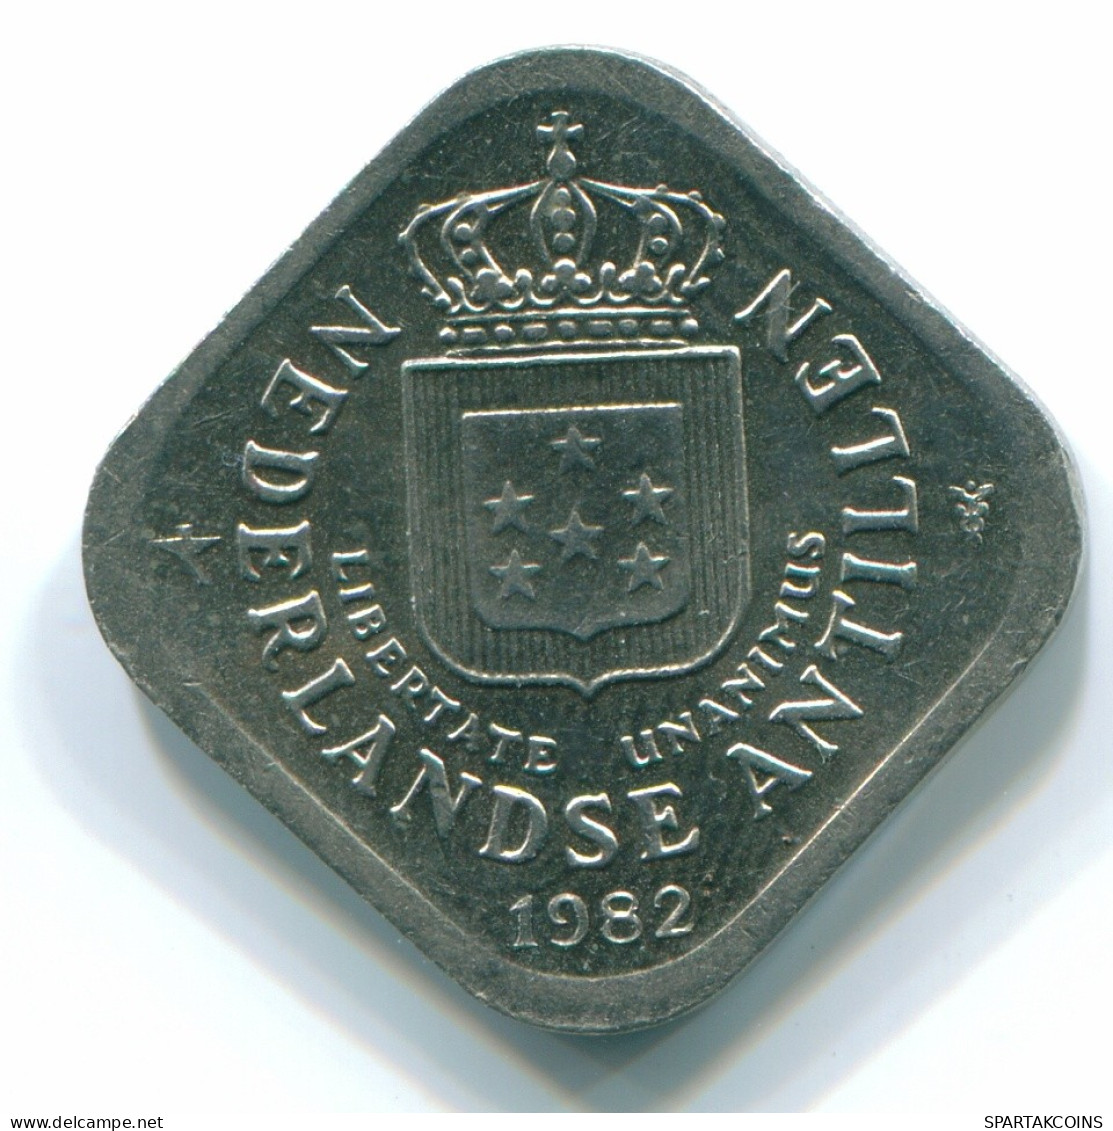 5 CENTS 1982 NETHERLANDS ANTILLES Nickel Colonial Coin #S12351.U.A - Antilles Néerlandaises